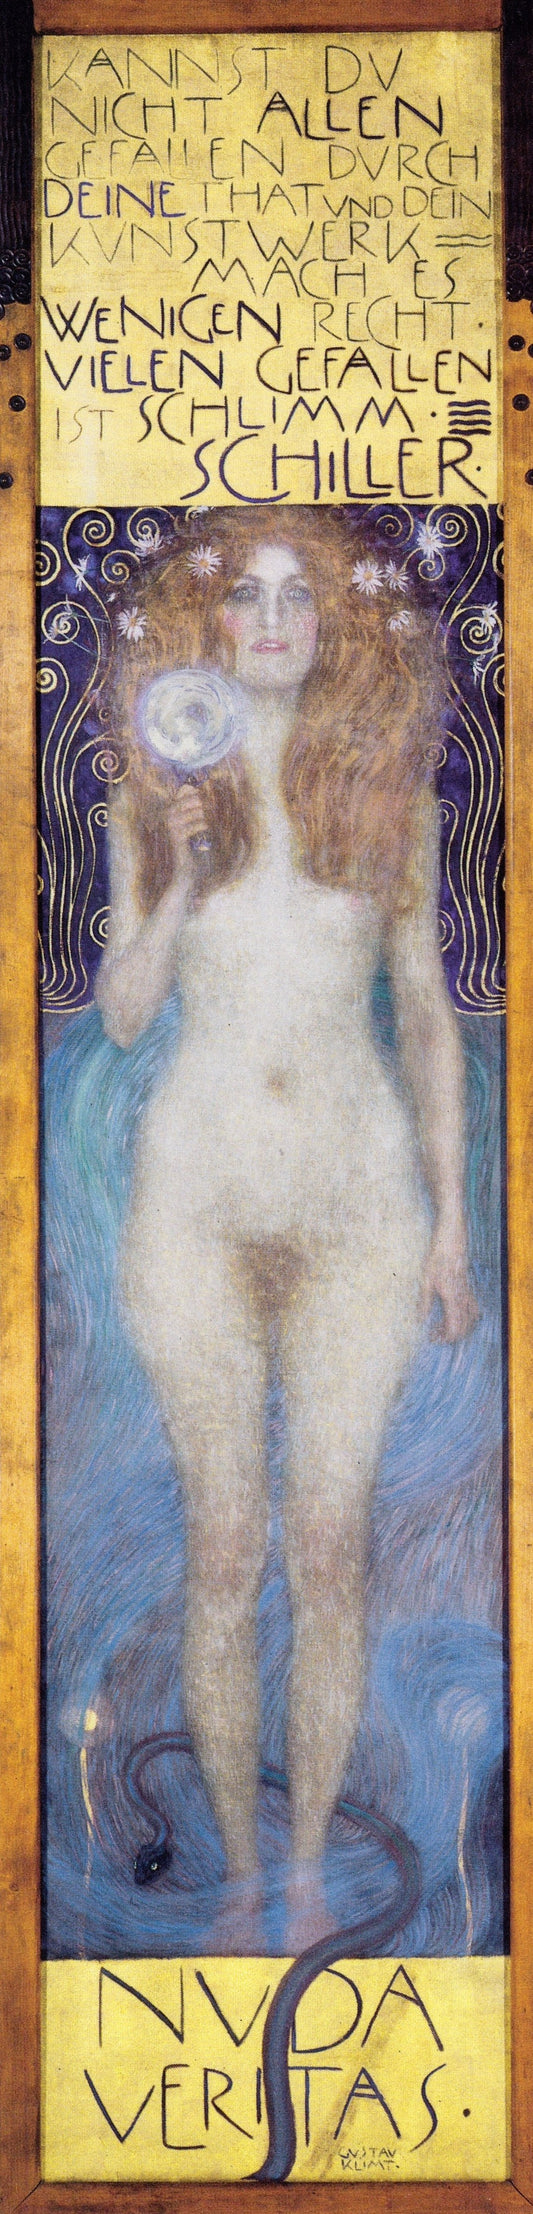 Nuda Veritas - Gustav Klimt